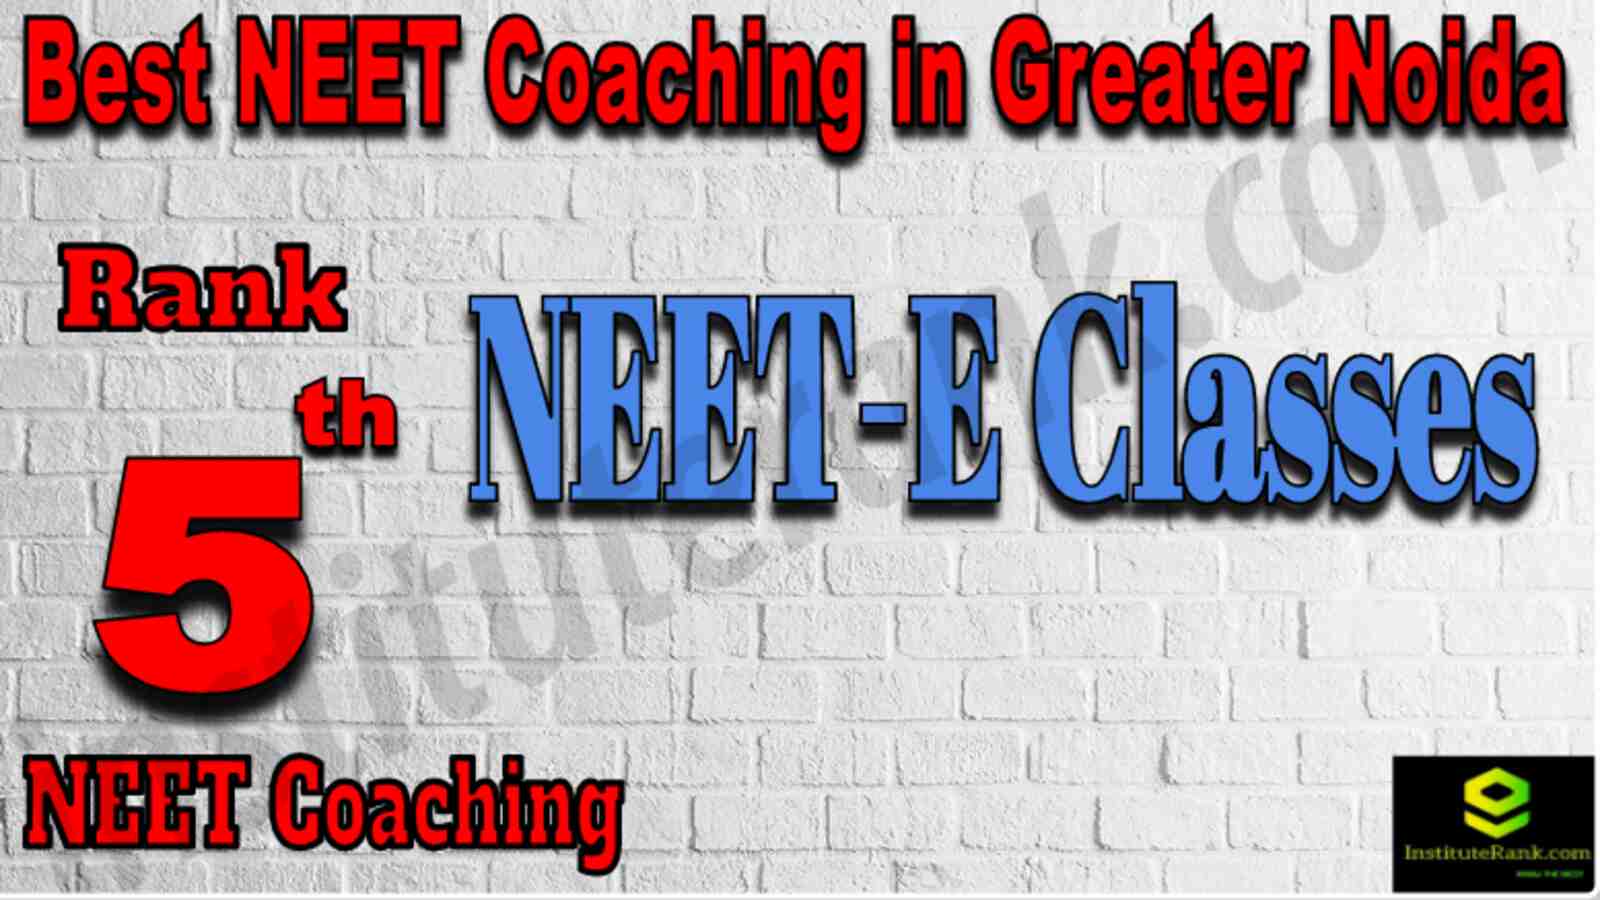 Rank 5 Best NEET Coaching in Greater Noida